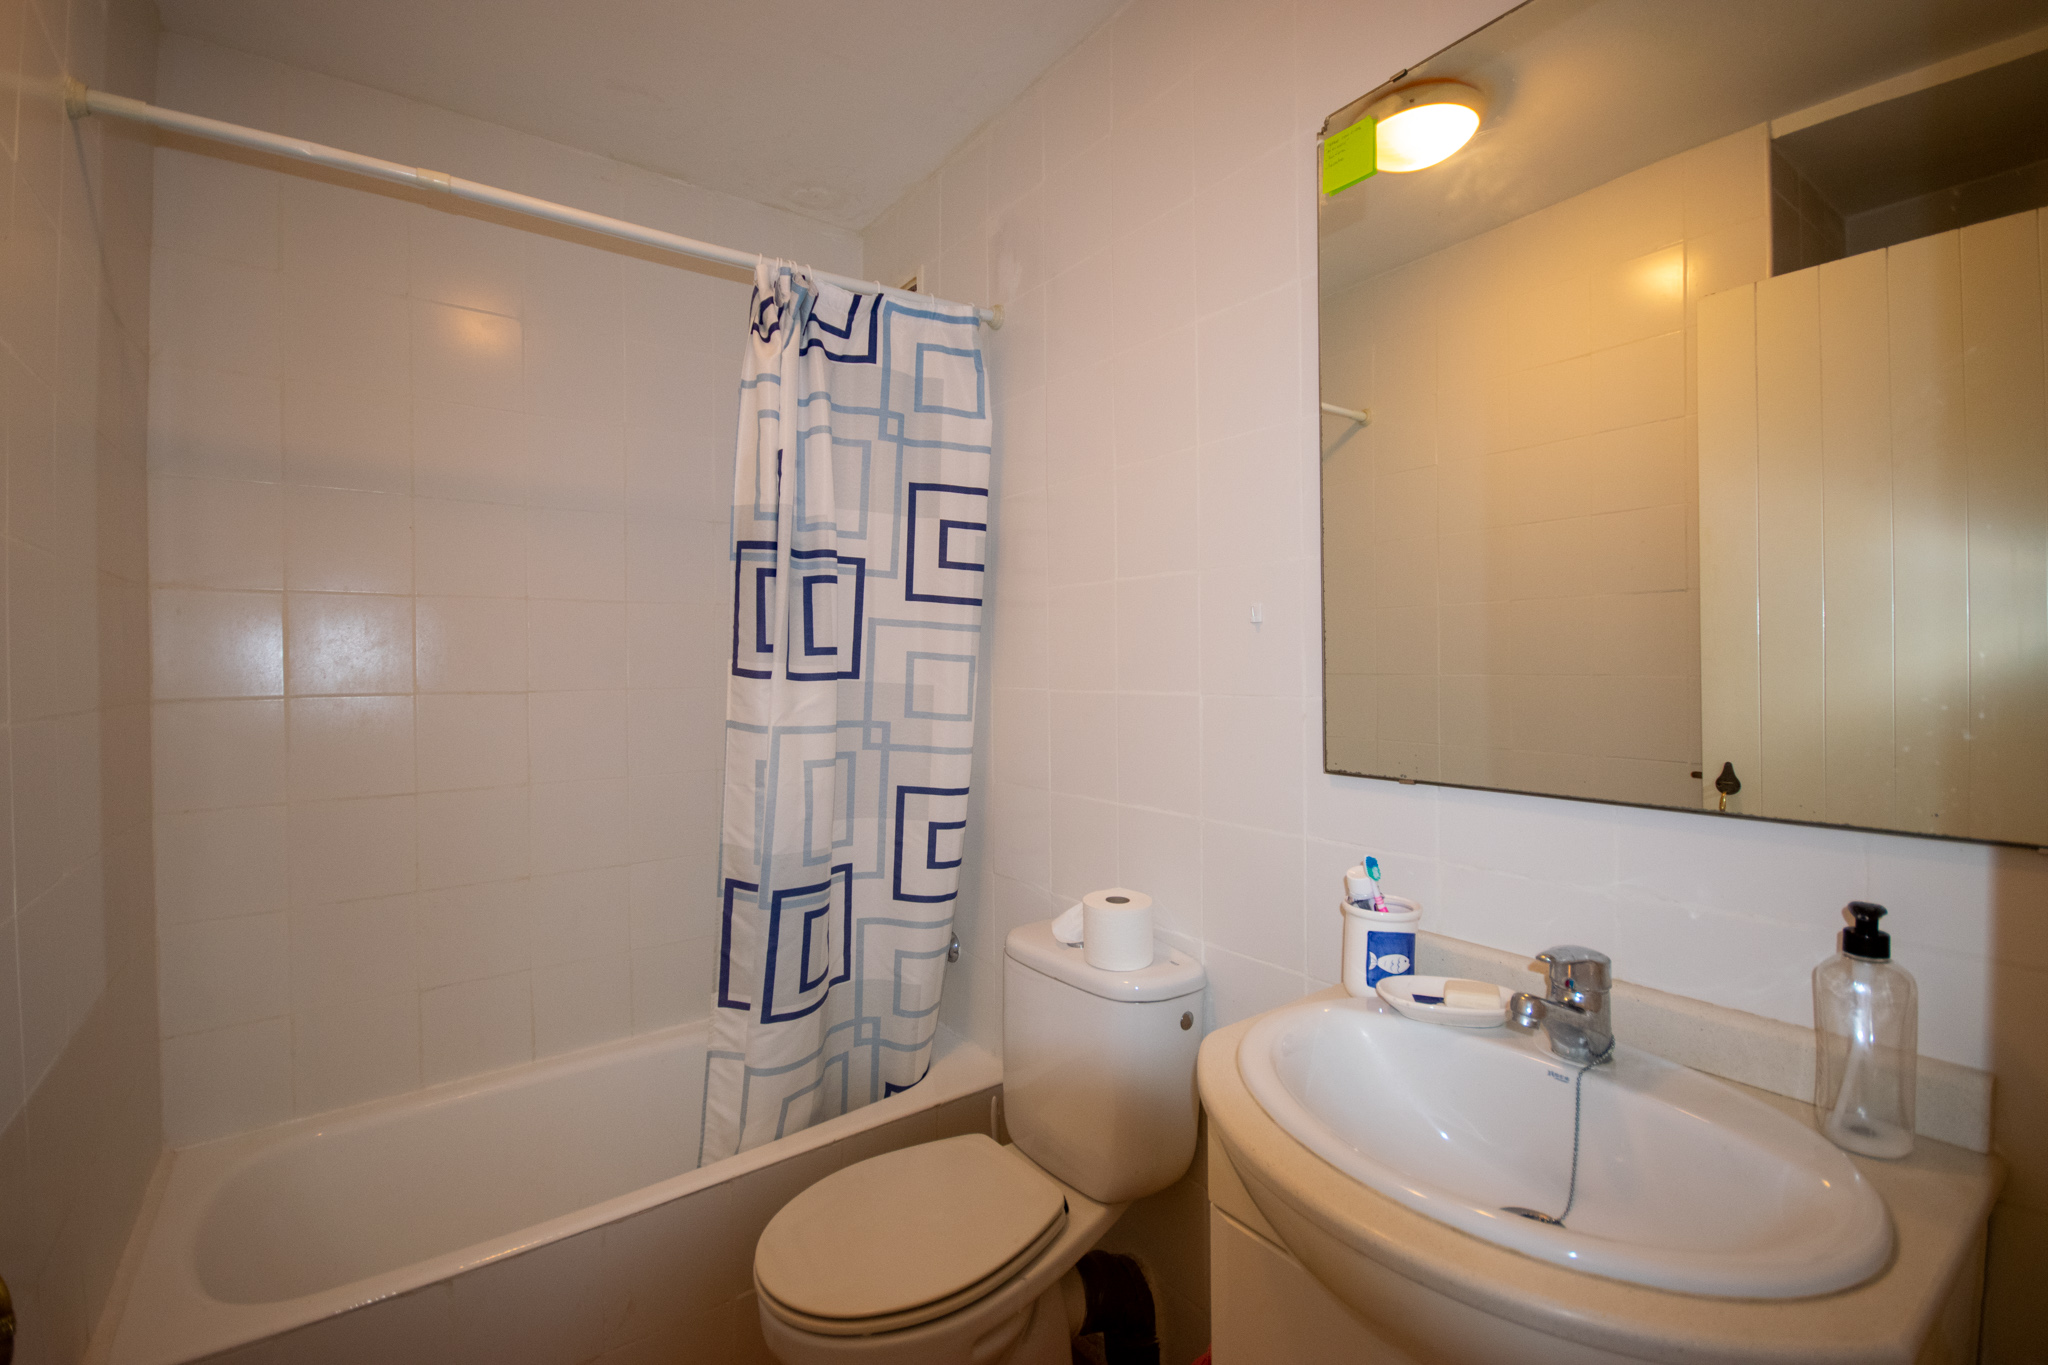 2-bedroom flat bathroom with terrace for sale in Es Mercadal